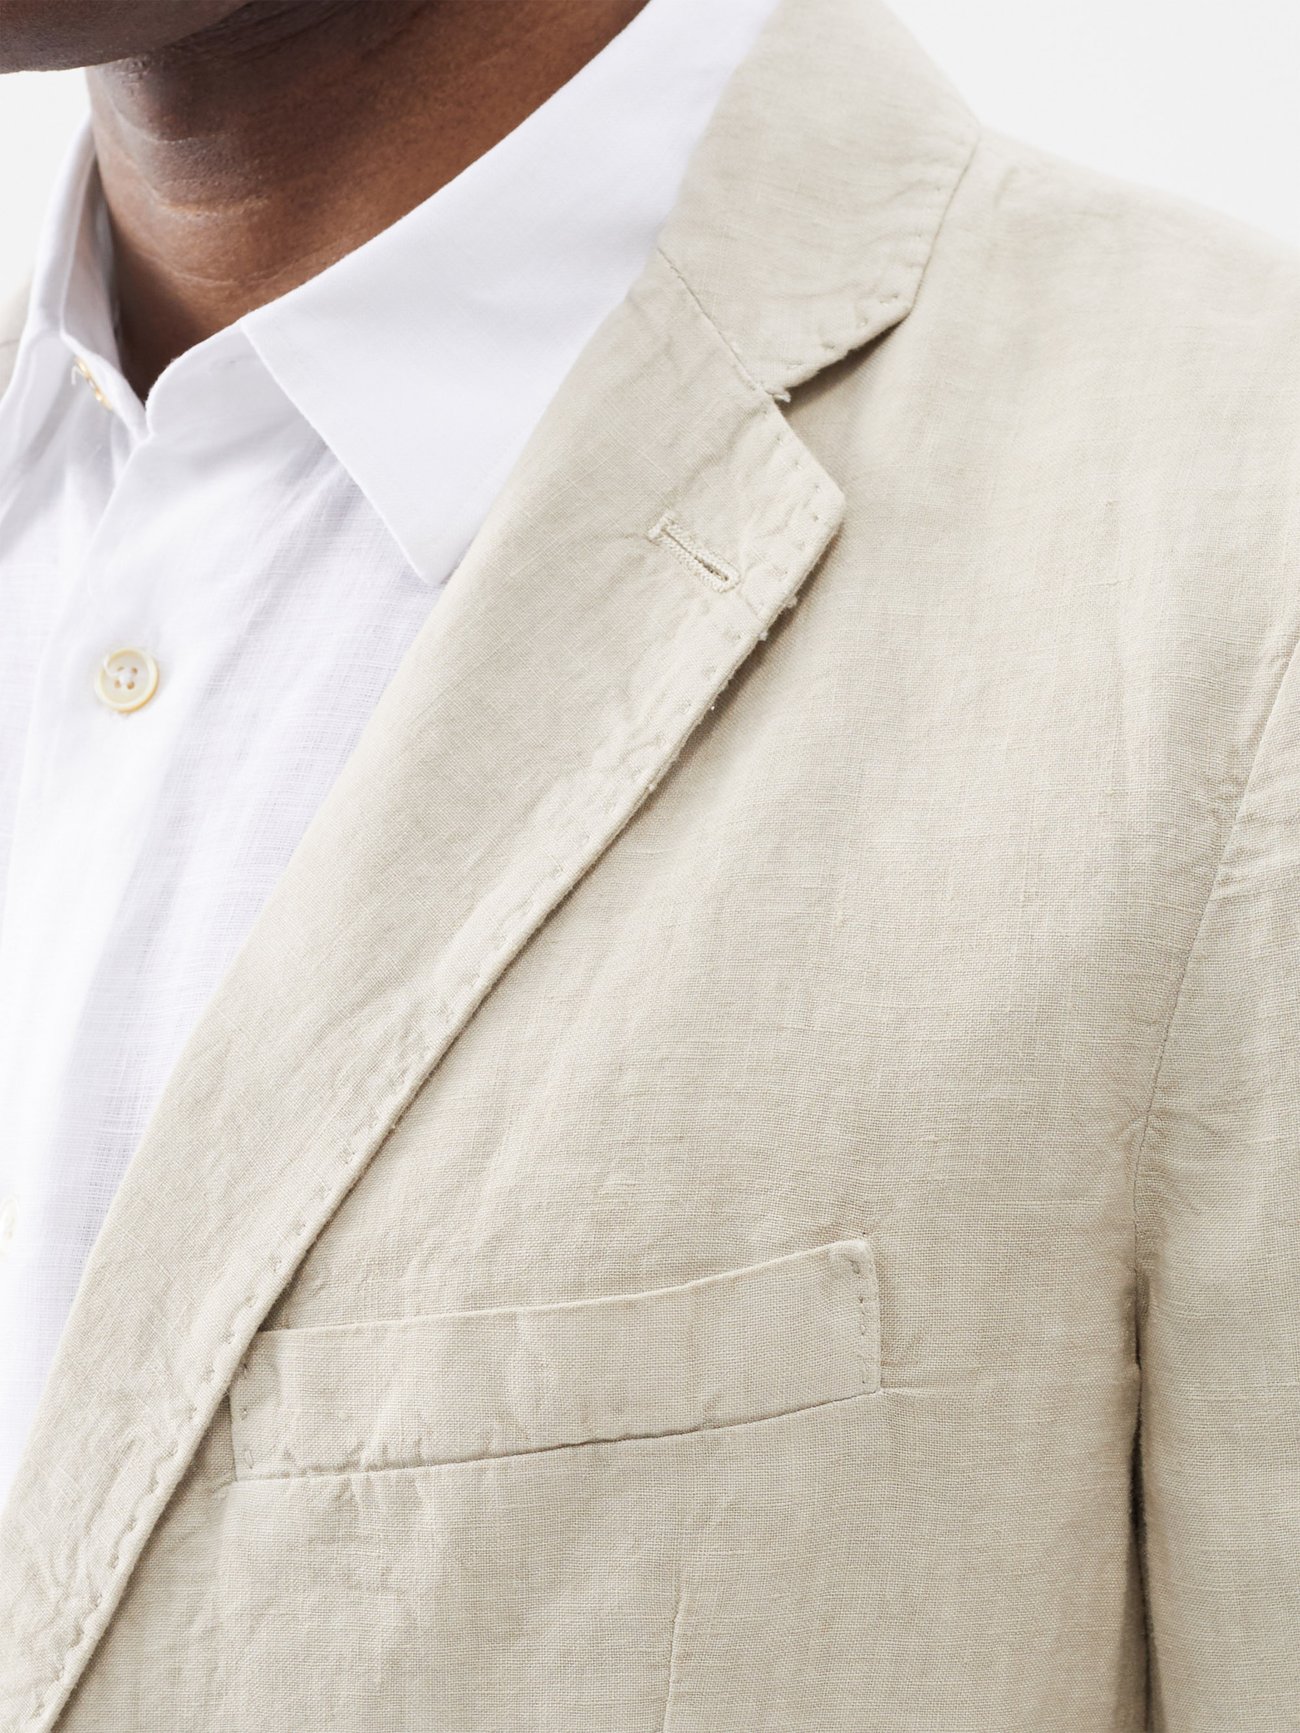 Beige Patch-pocket linen suit jacket, 120% Lino